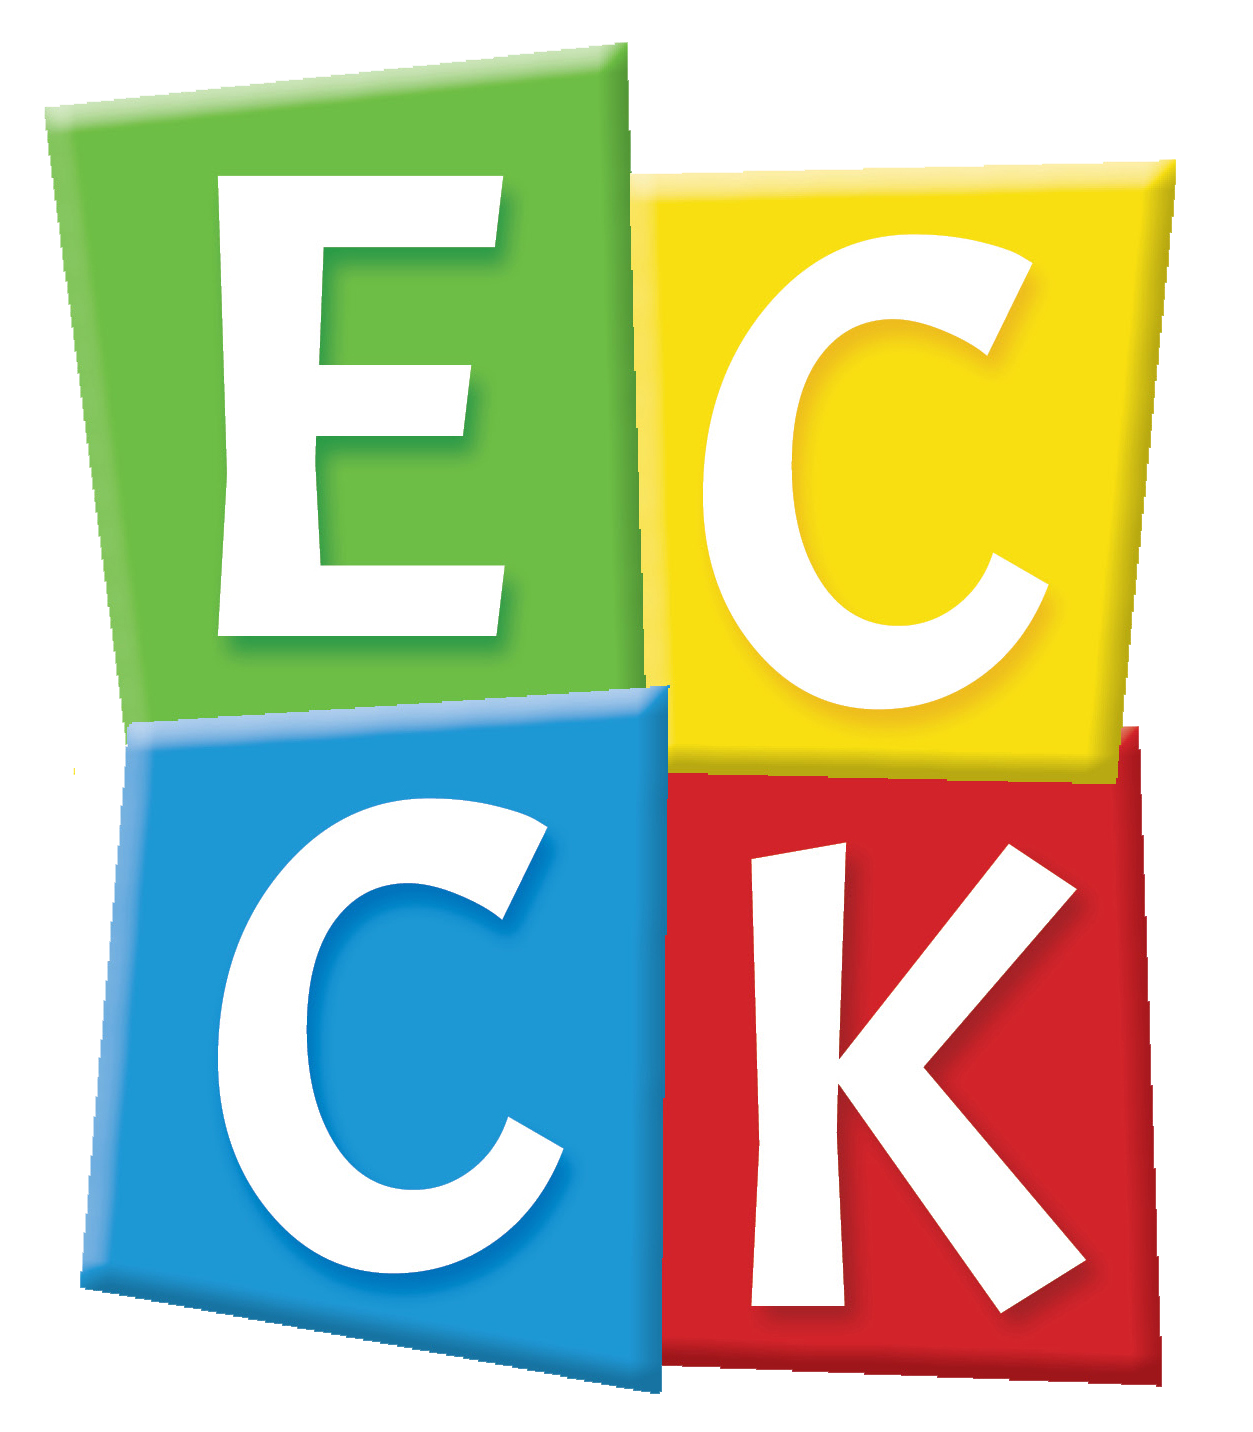 ECCK 2022 logo Var 2 logo only trans